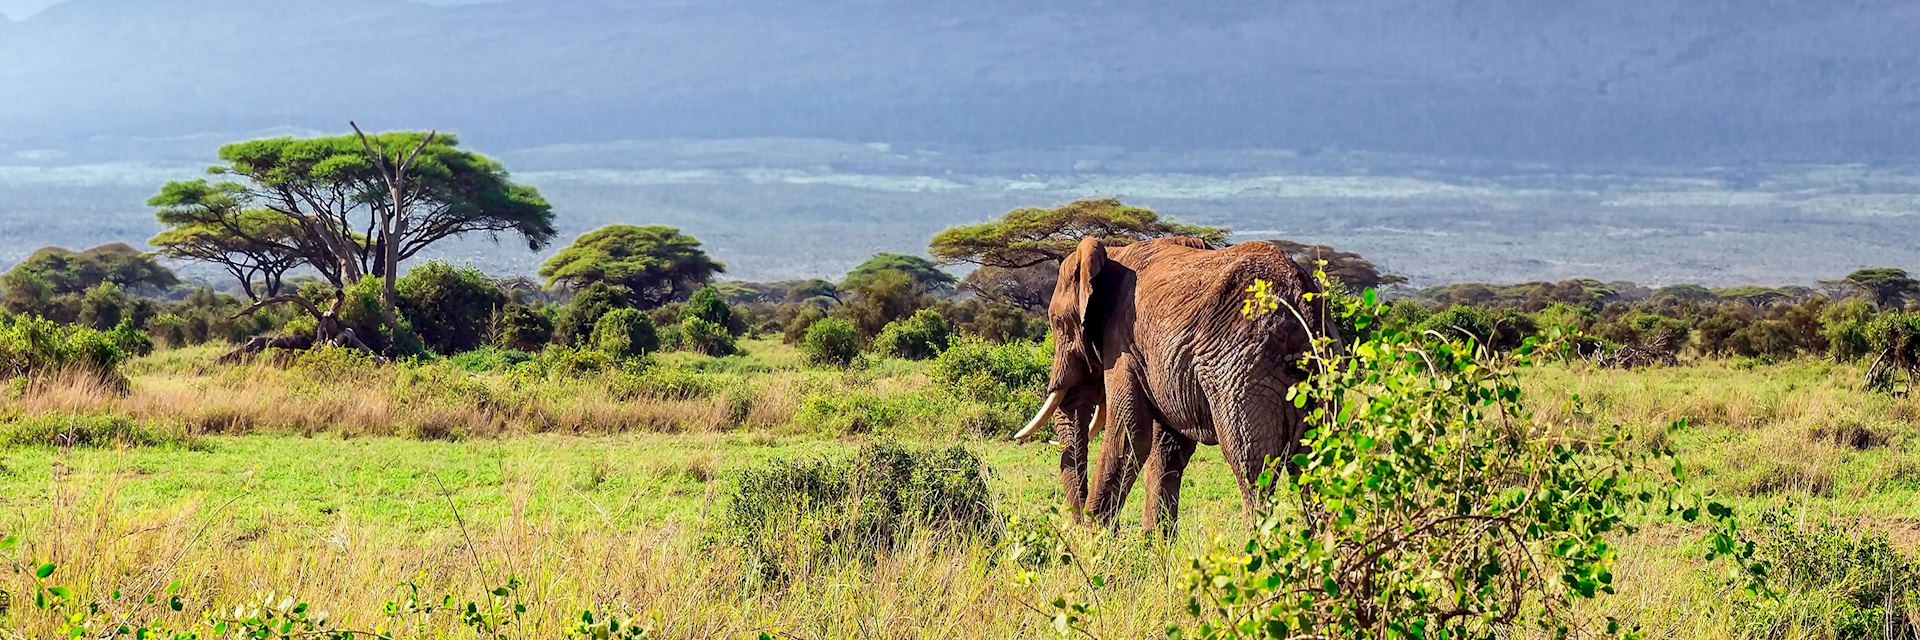 Elephant in Kilimanjaro National Park